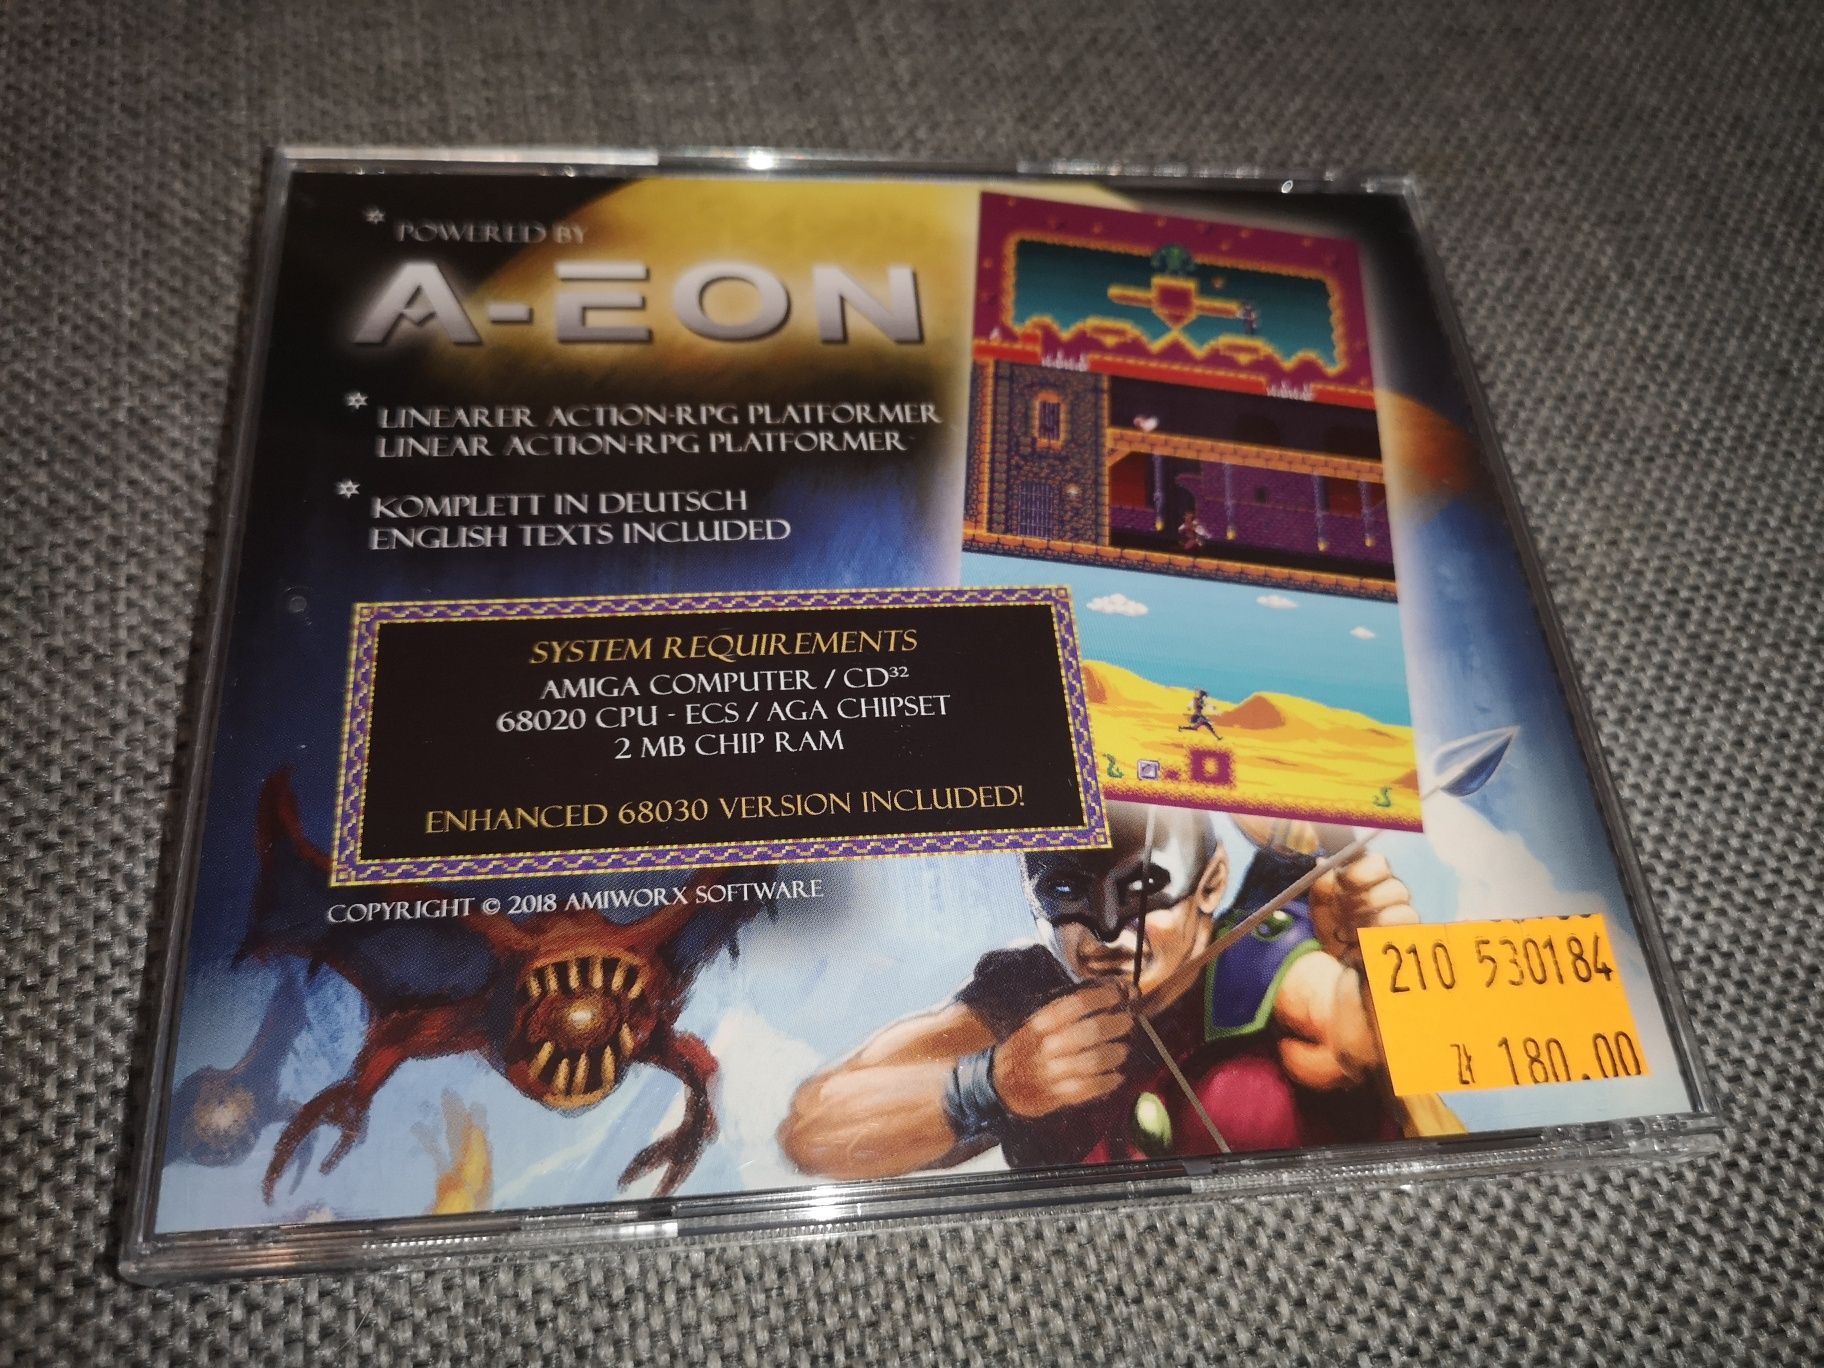 Heroes of Gorluth AMIGA CD32 gra (jak nowa) kioskzgrami